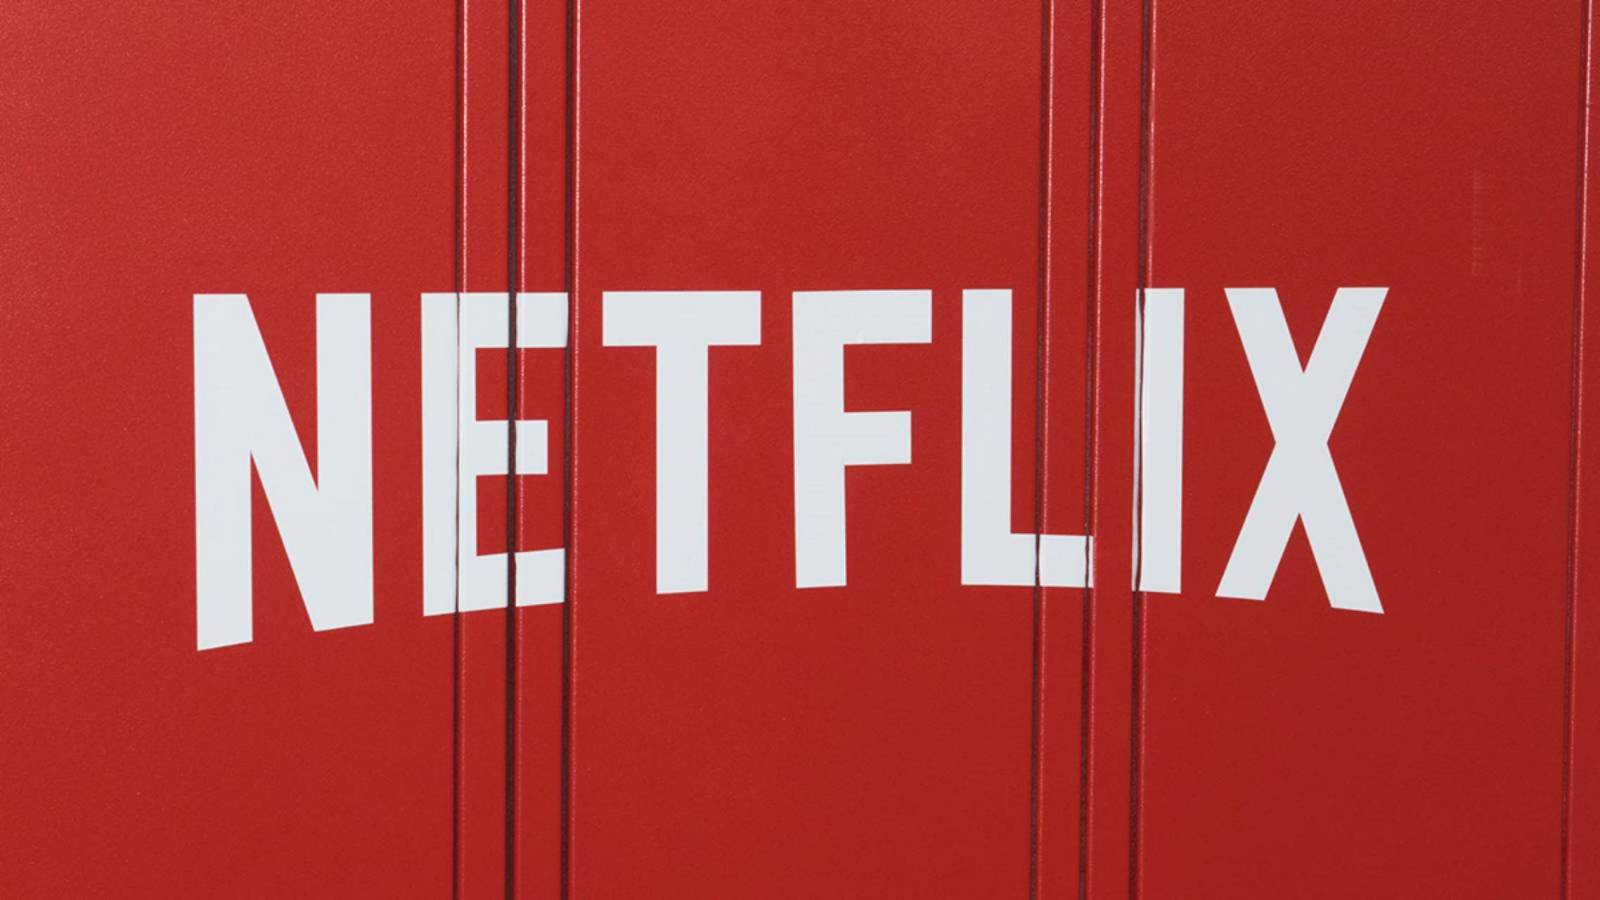 Netflix URIASA Surpriza cu Noua Functie Luata de la TikTok